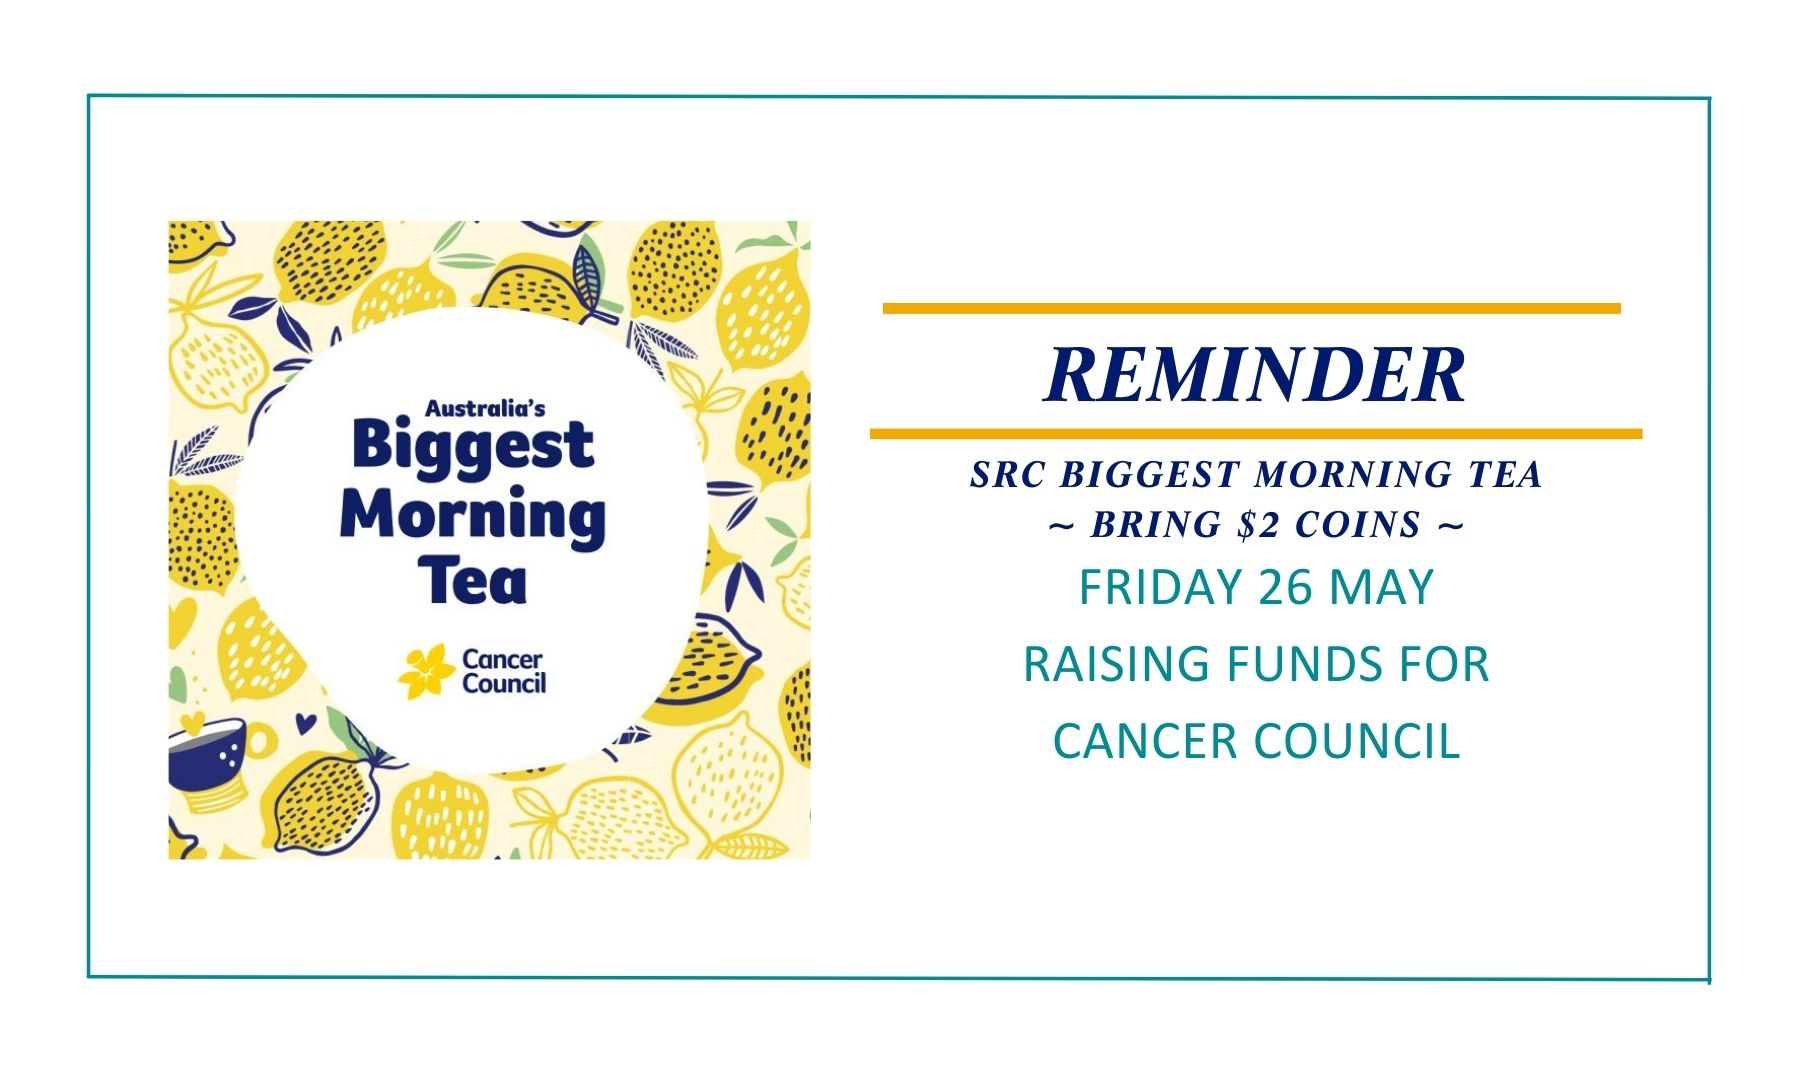 Primary SRC Biggest Morning Tea Reminder